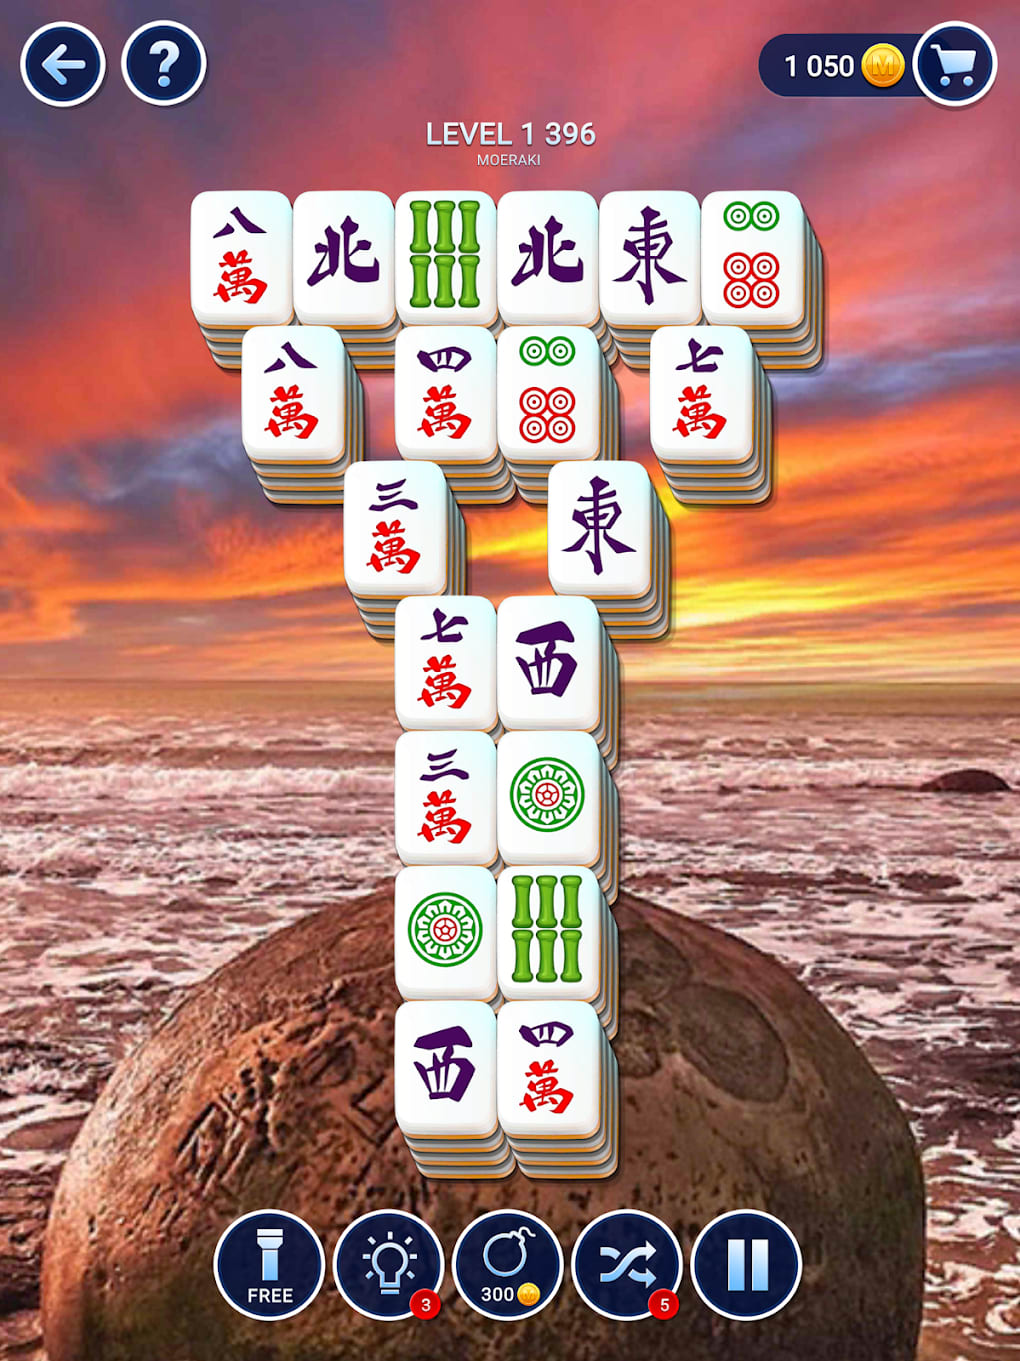 Download do APK de Mahjong Club para Android